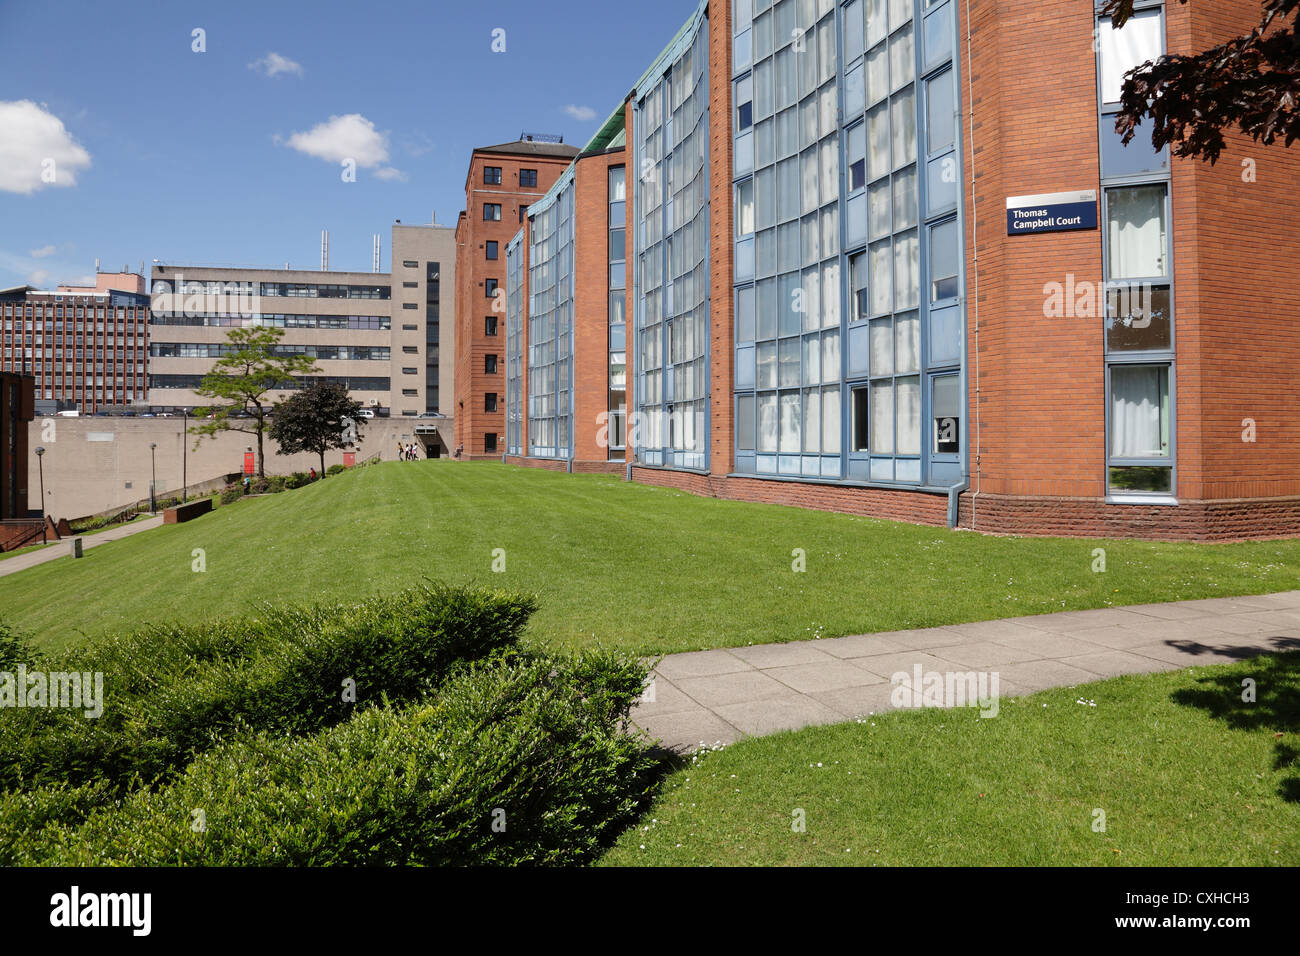 Universidad de Strathclyde alojamiento para estudiantes, Thomas Campbell Court, Glasgow, Escocia, Reino Unido Foto de stock